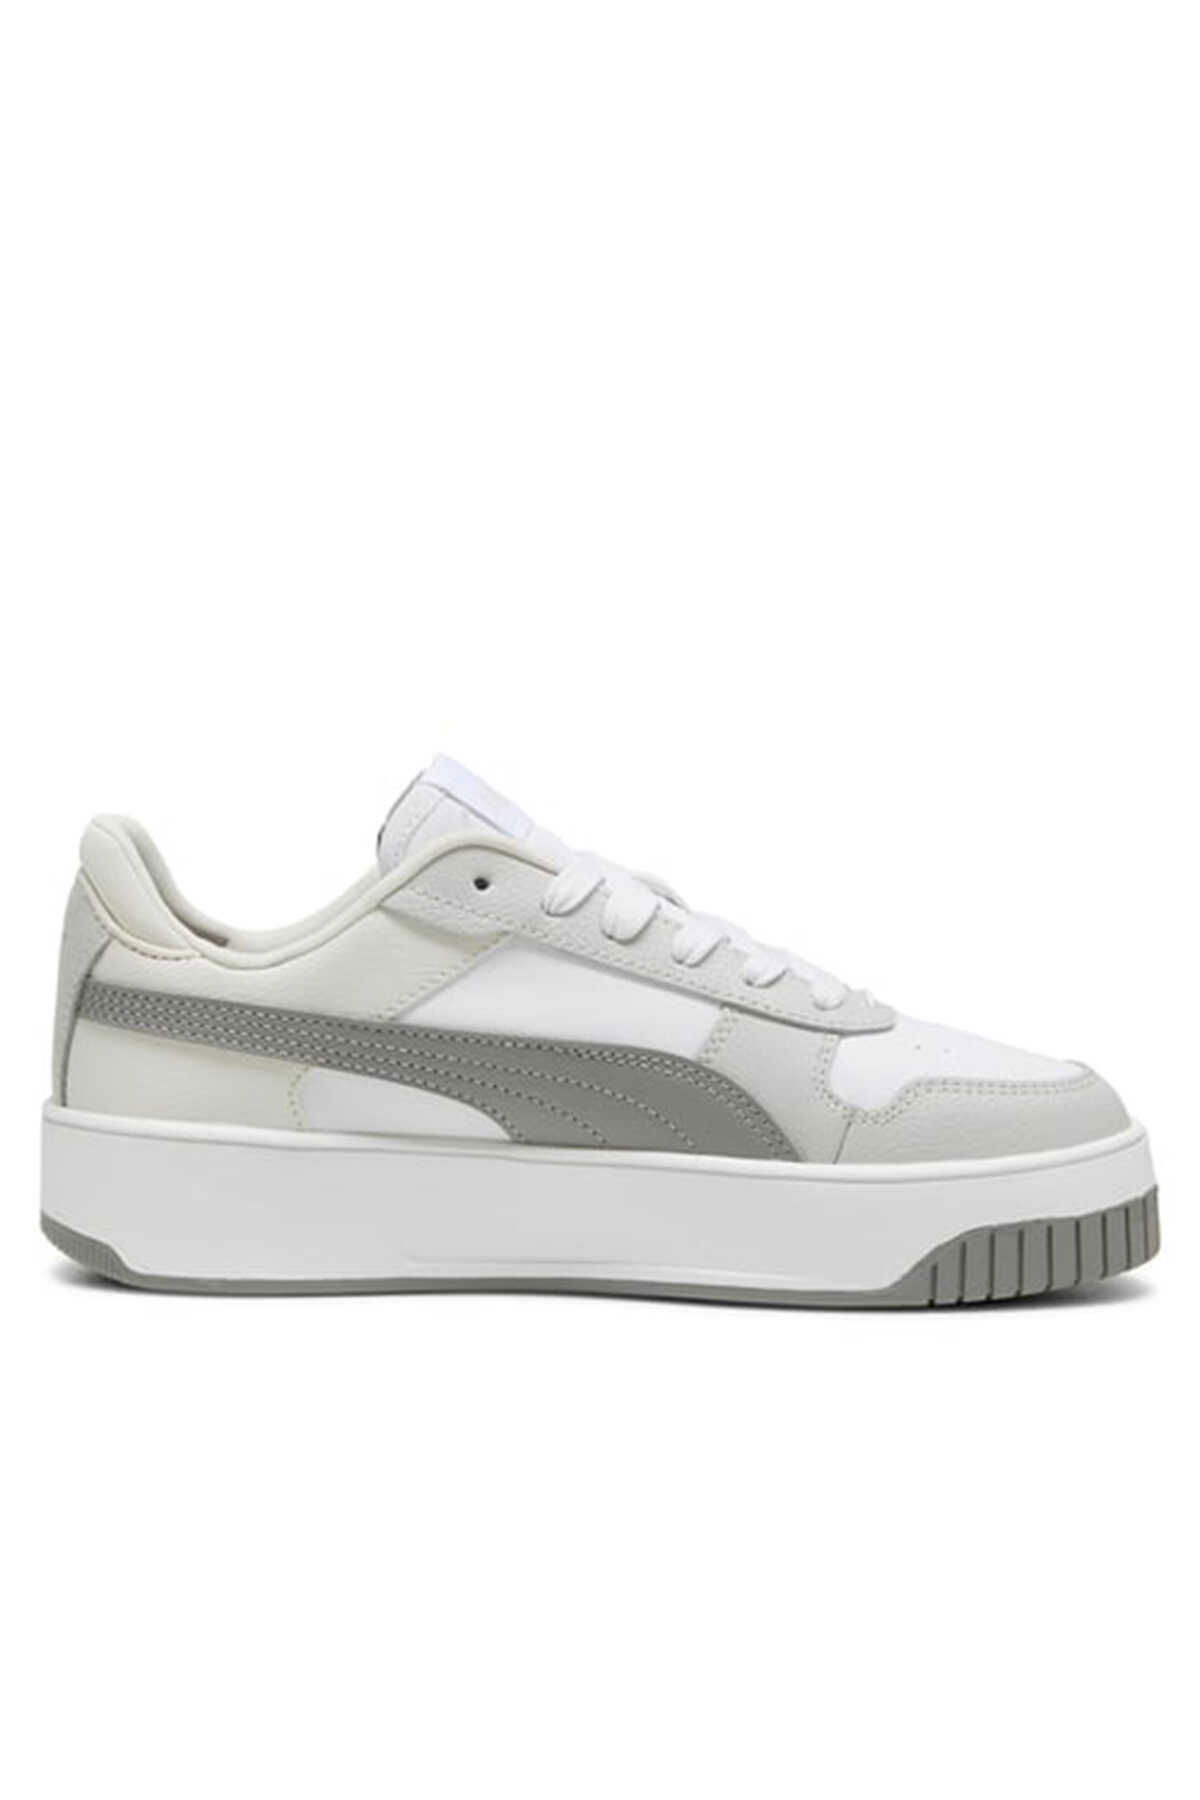 Puma - Puma Carina Street Kadın Sneaker Ayakkabı Beyaz / Gri